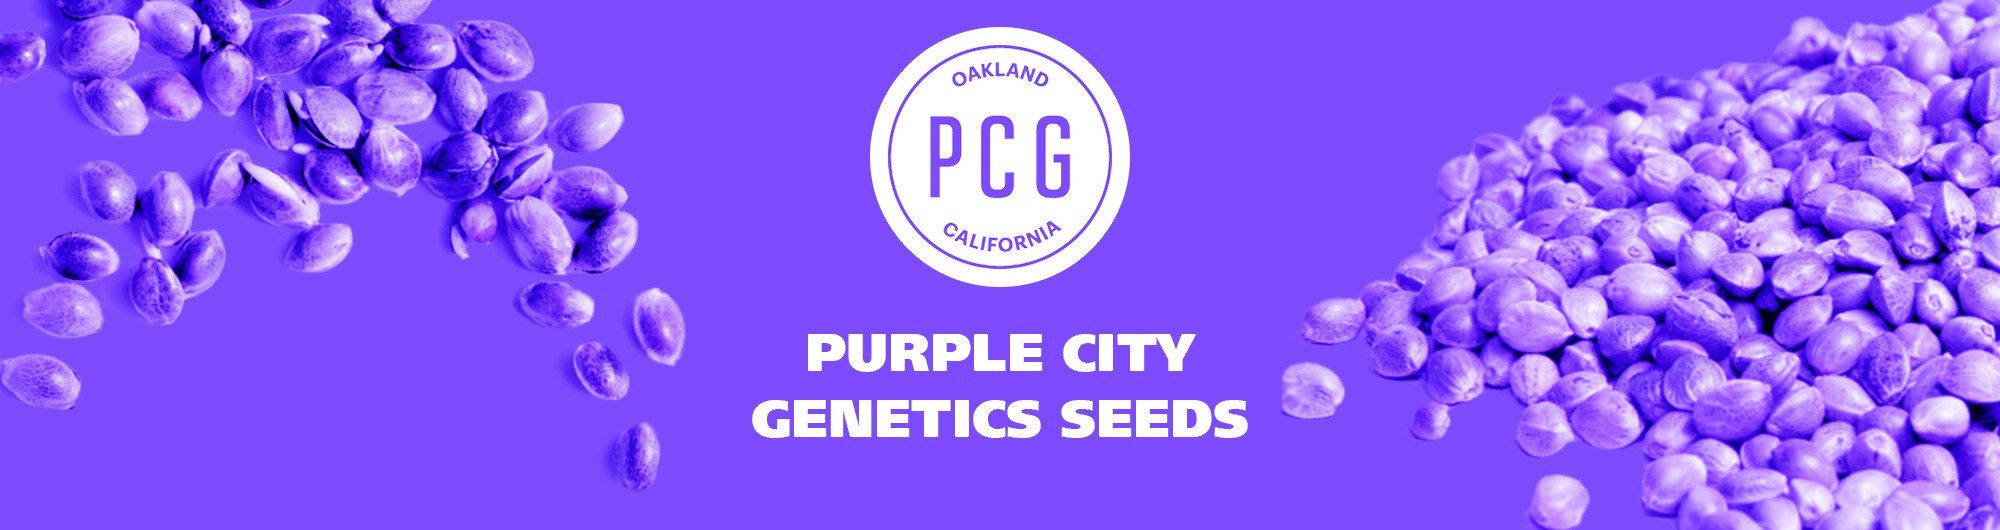 Purple city genetic seeds